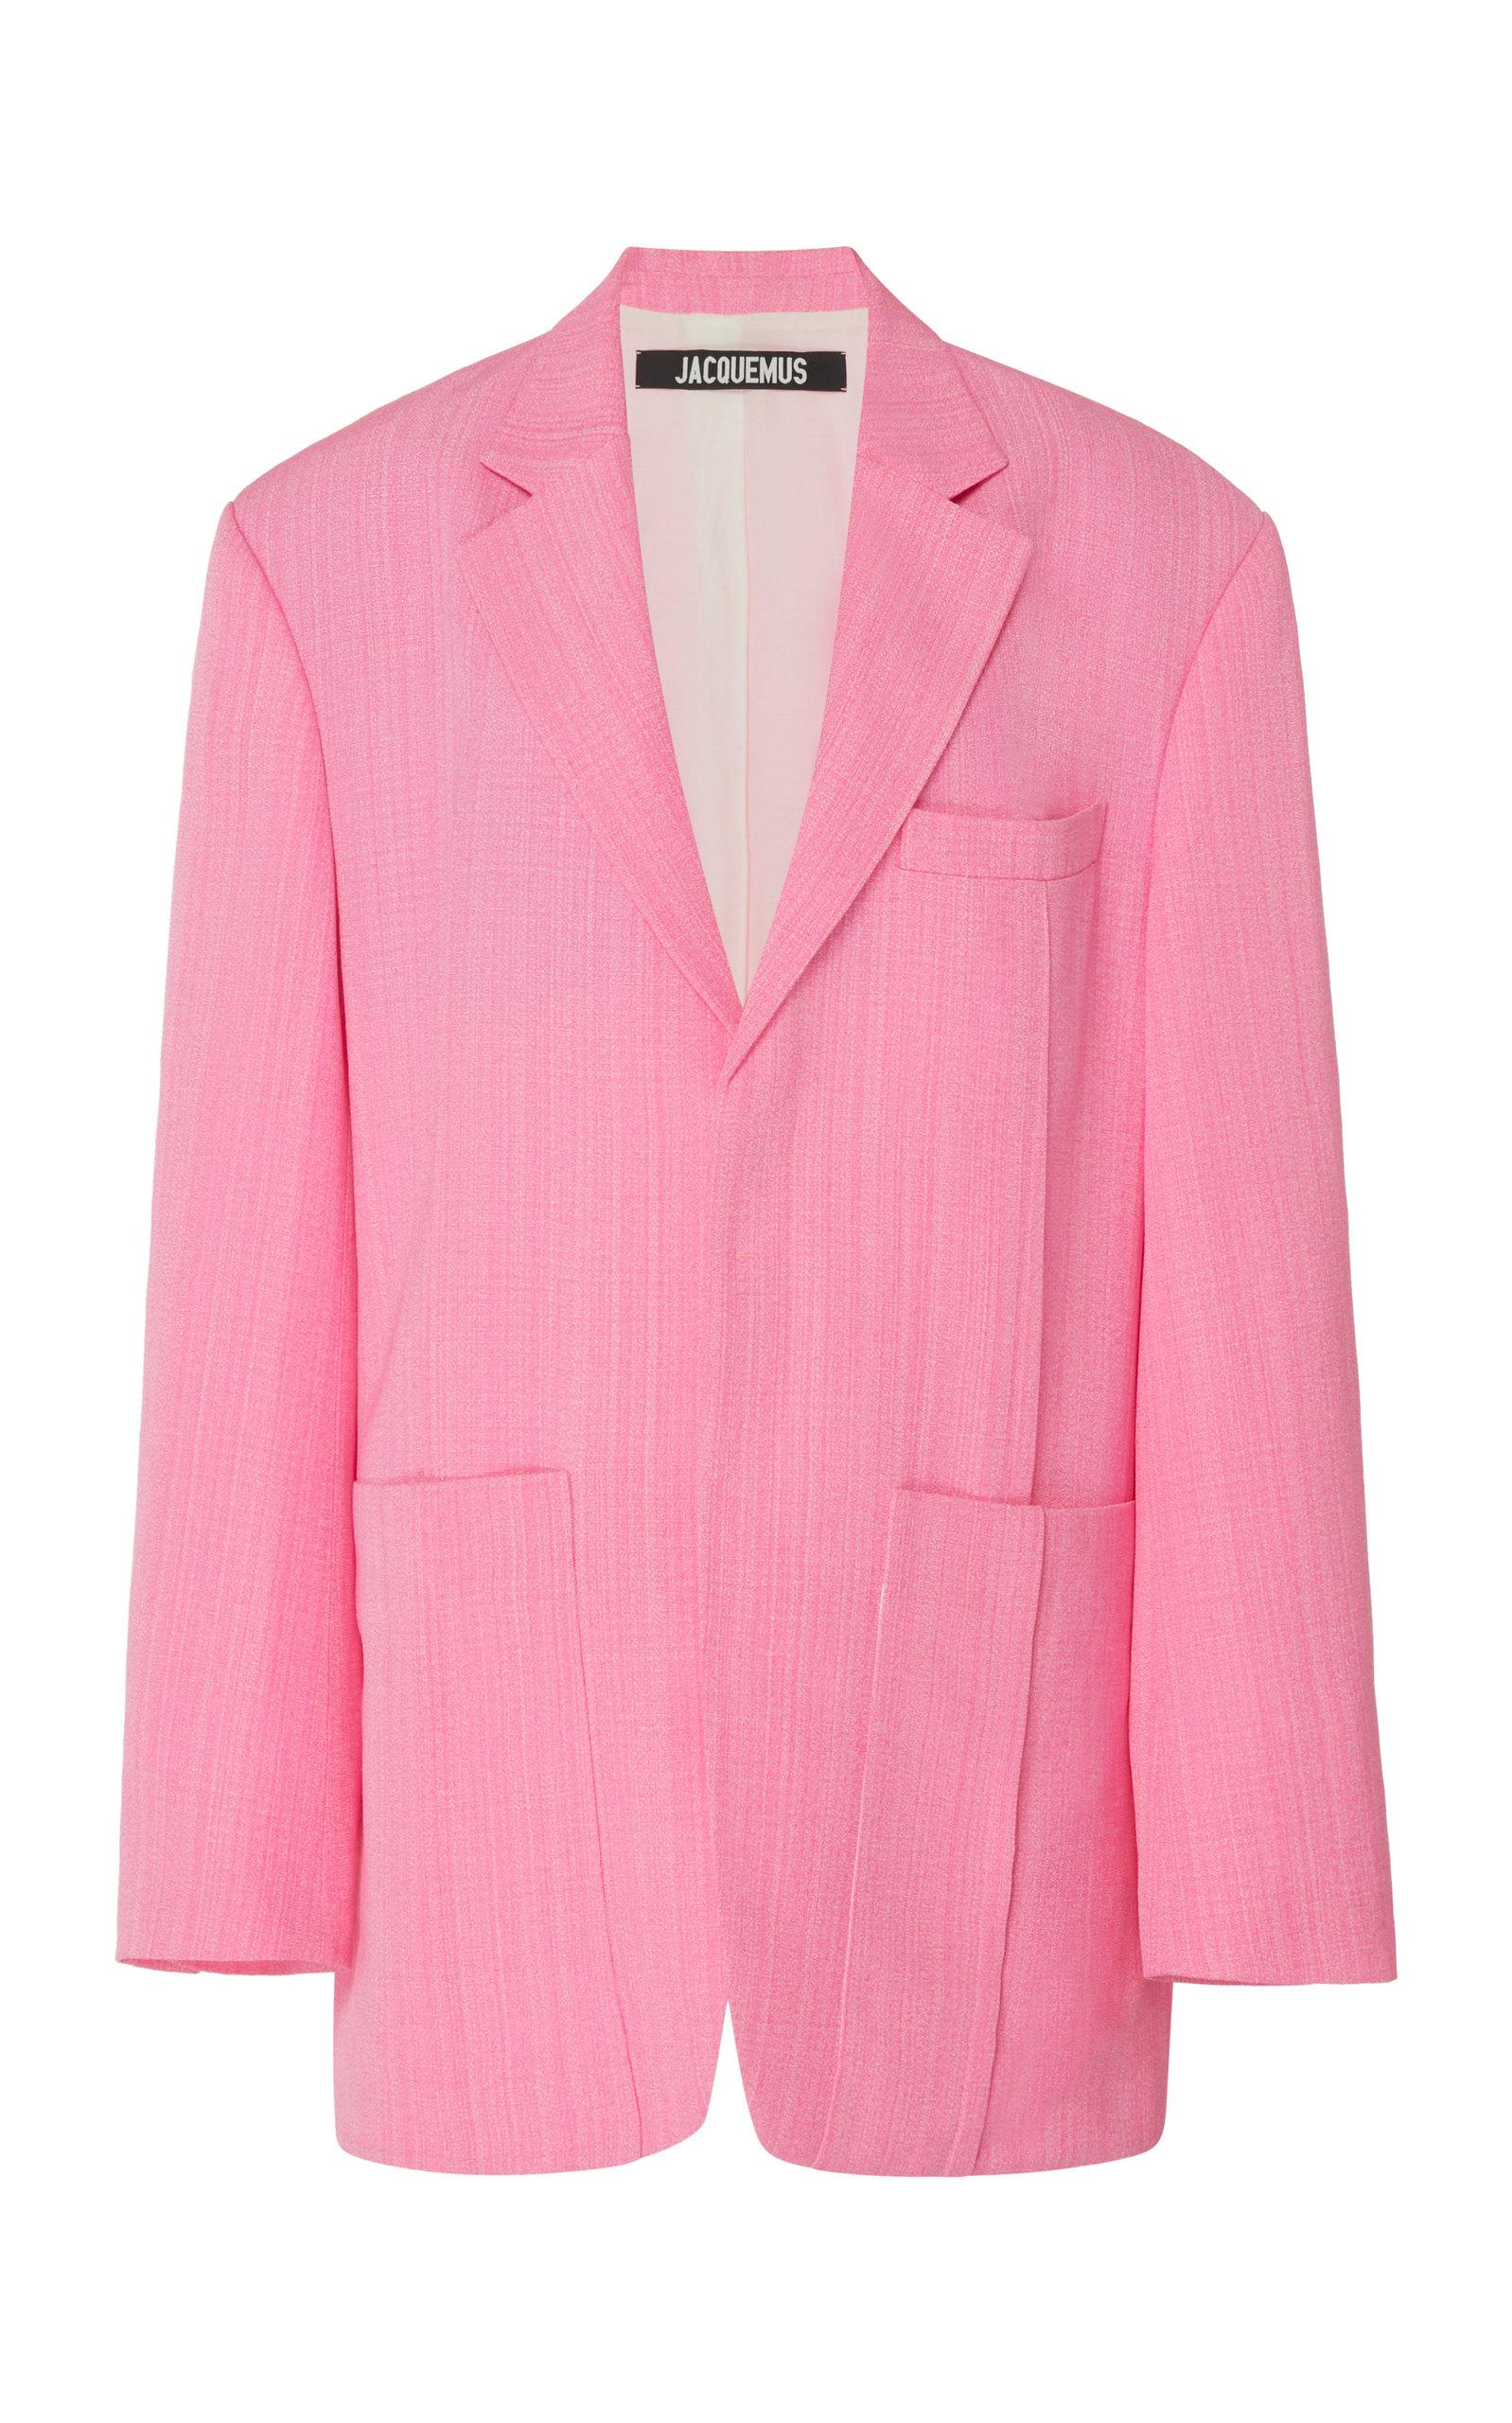 Jacquemus La Veste D'homme Oversized Menswear Blazer in Pink | Lyst